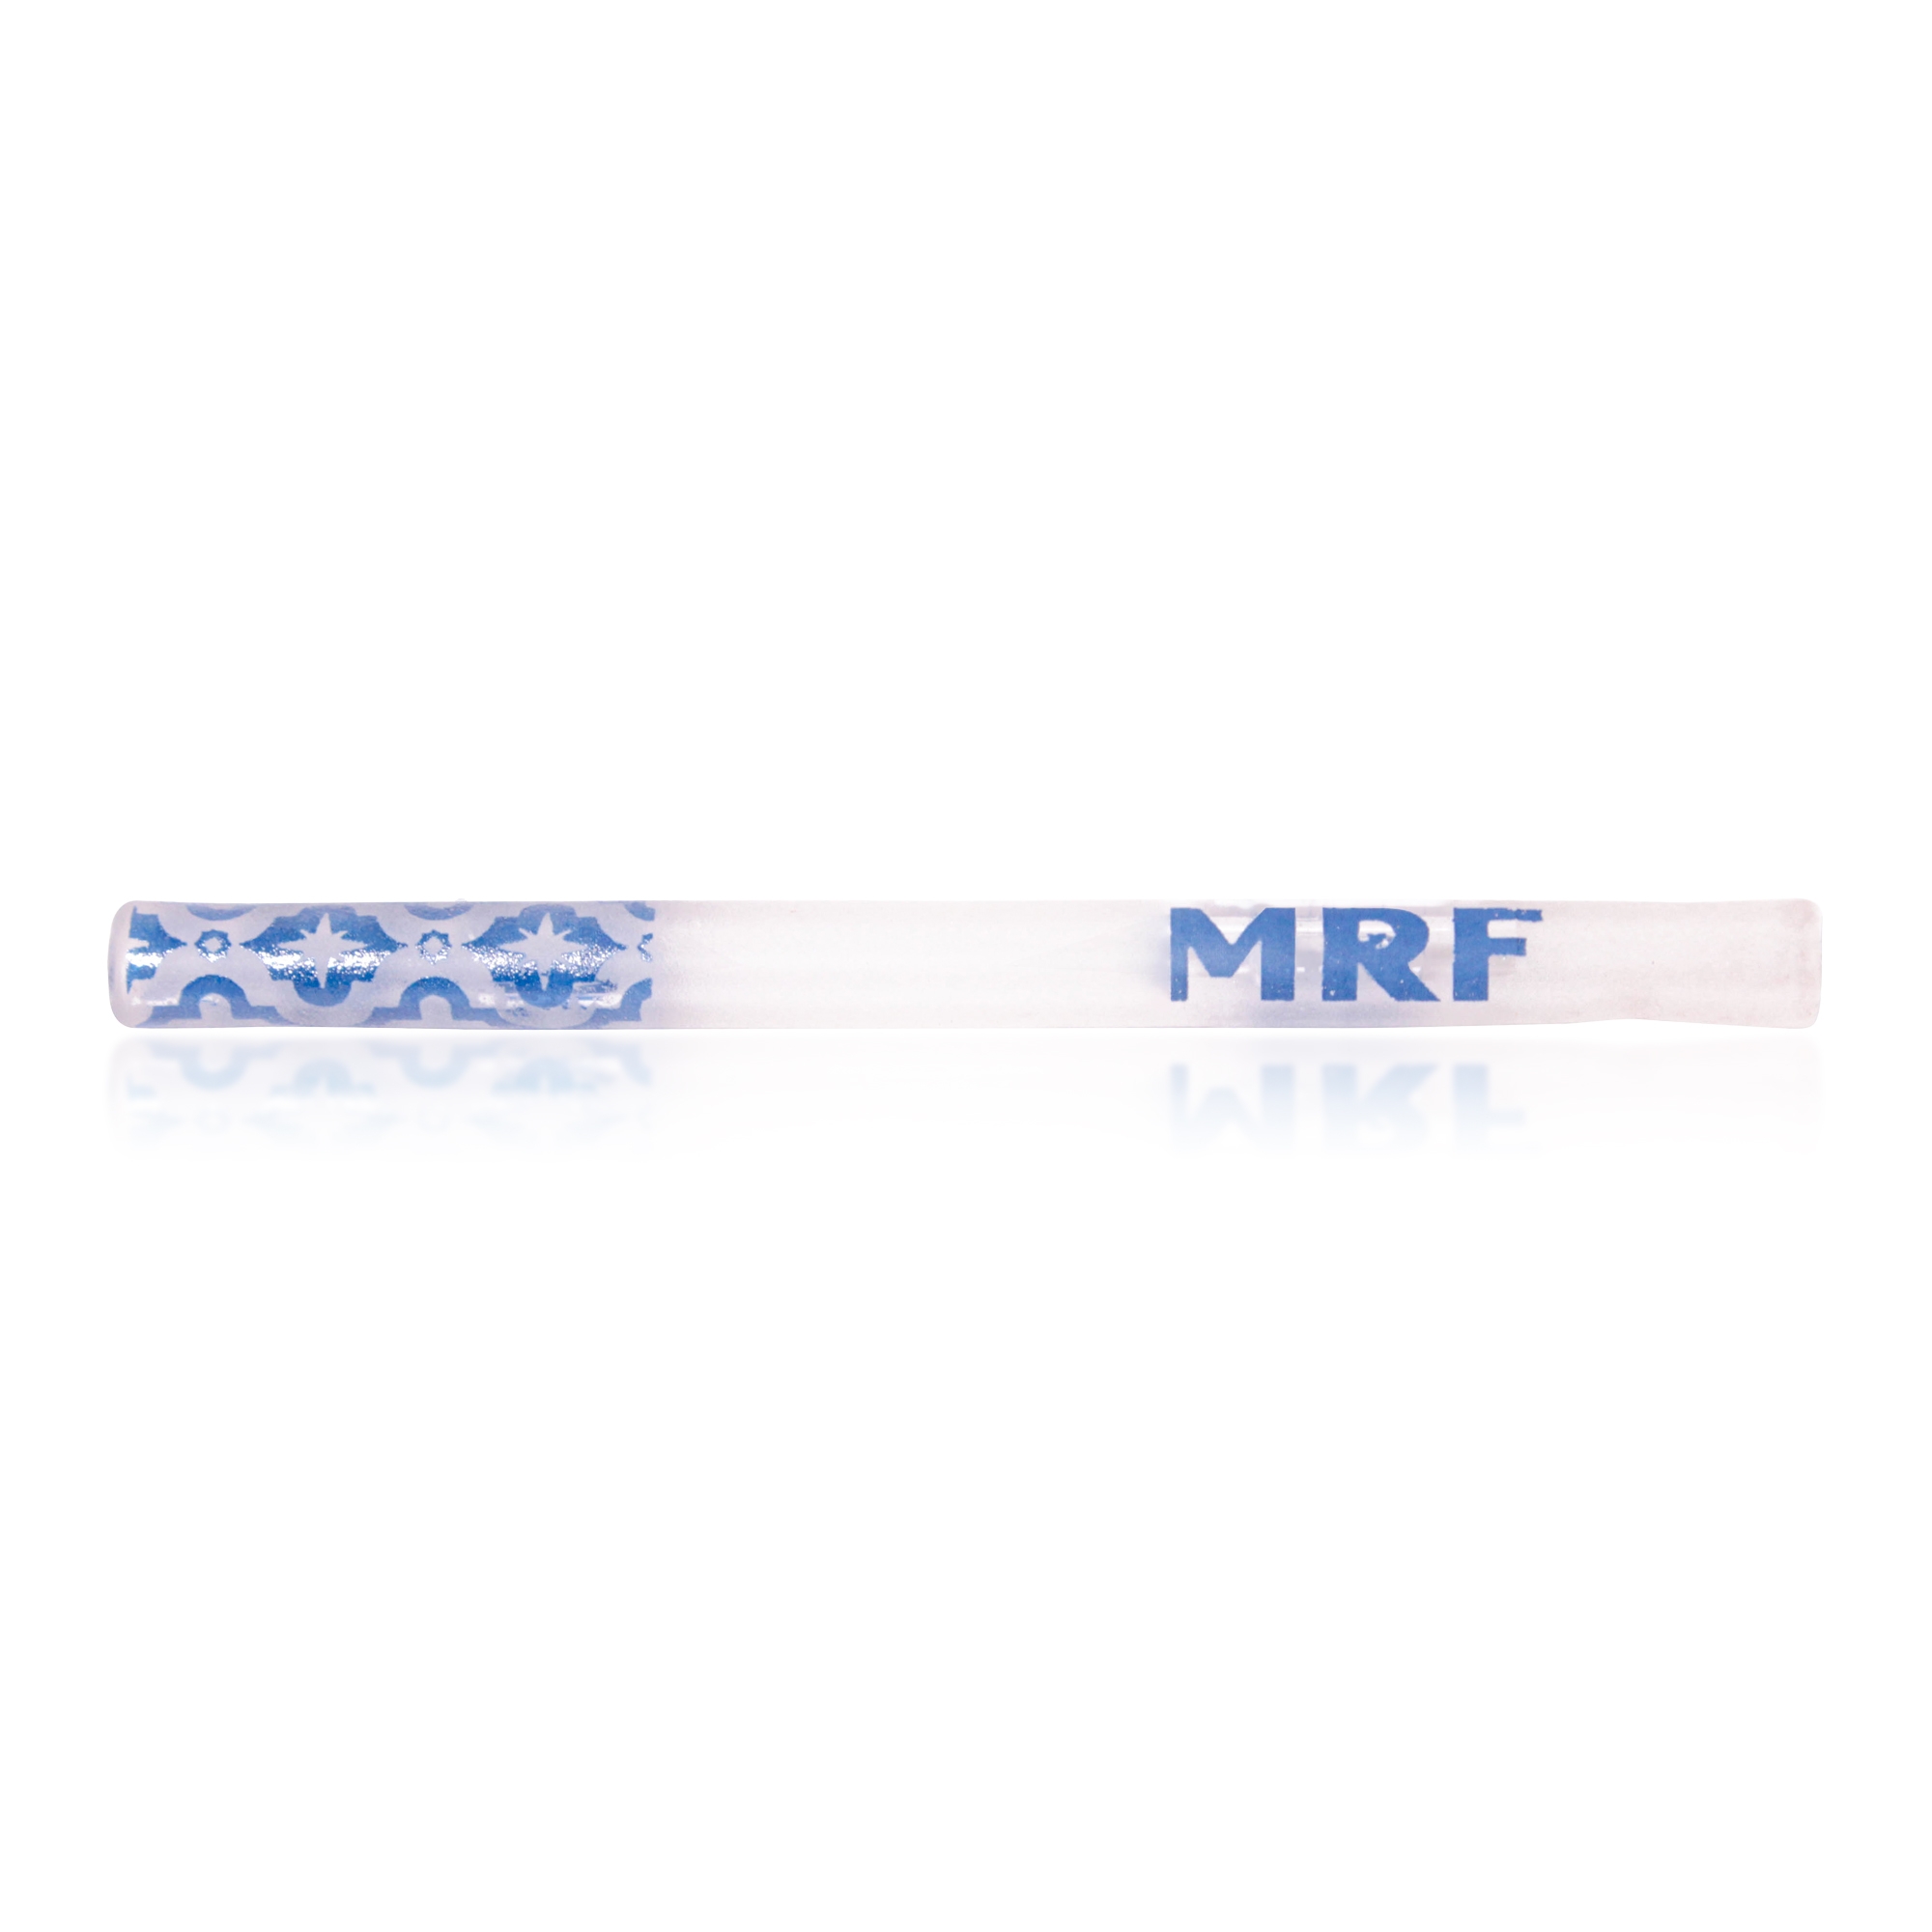 Piteira de Vidro MRF SandBlast COM bocal (8cm x 6mm)  - Mr. Fumo